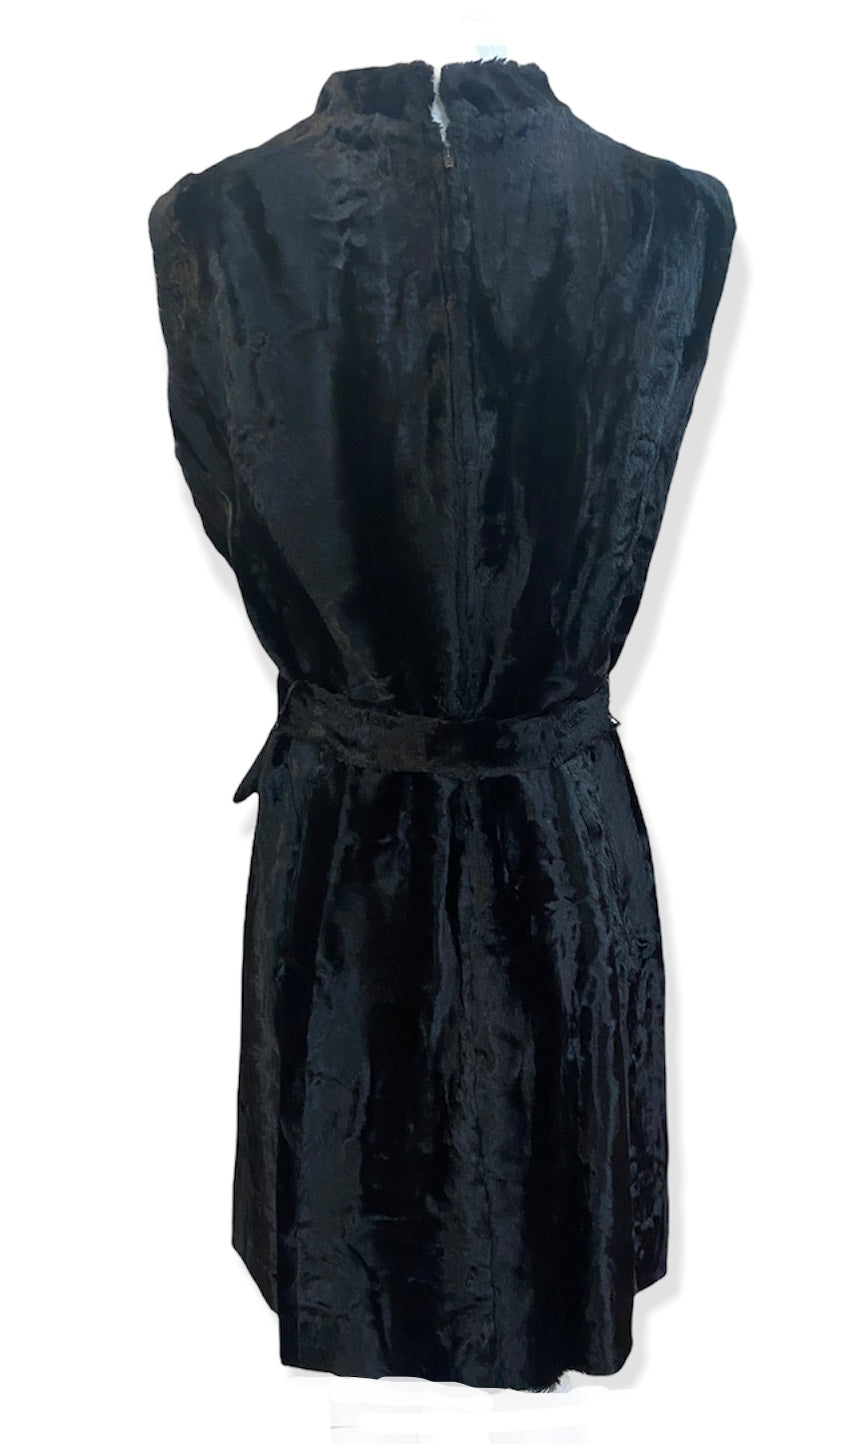  60s Symphony Black Faux Fur Mod Dress with Sash Belt BACK WITH BELT 4 of 5